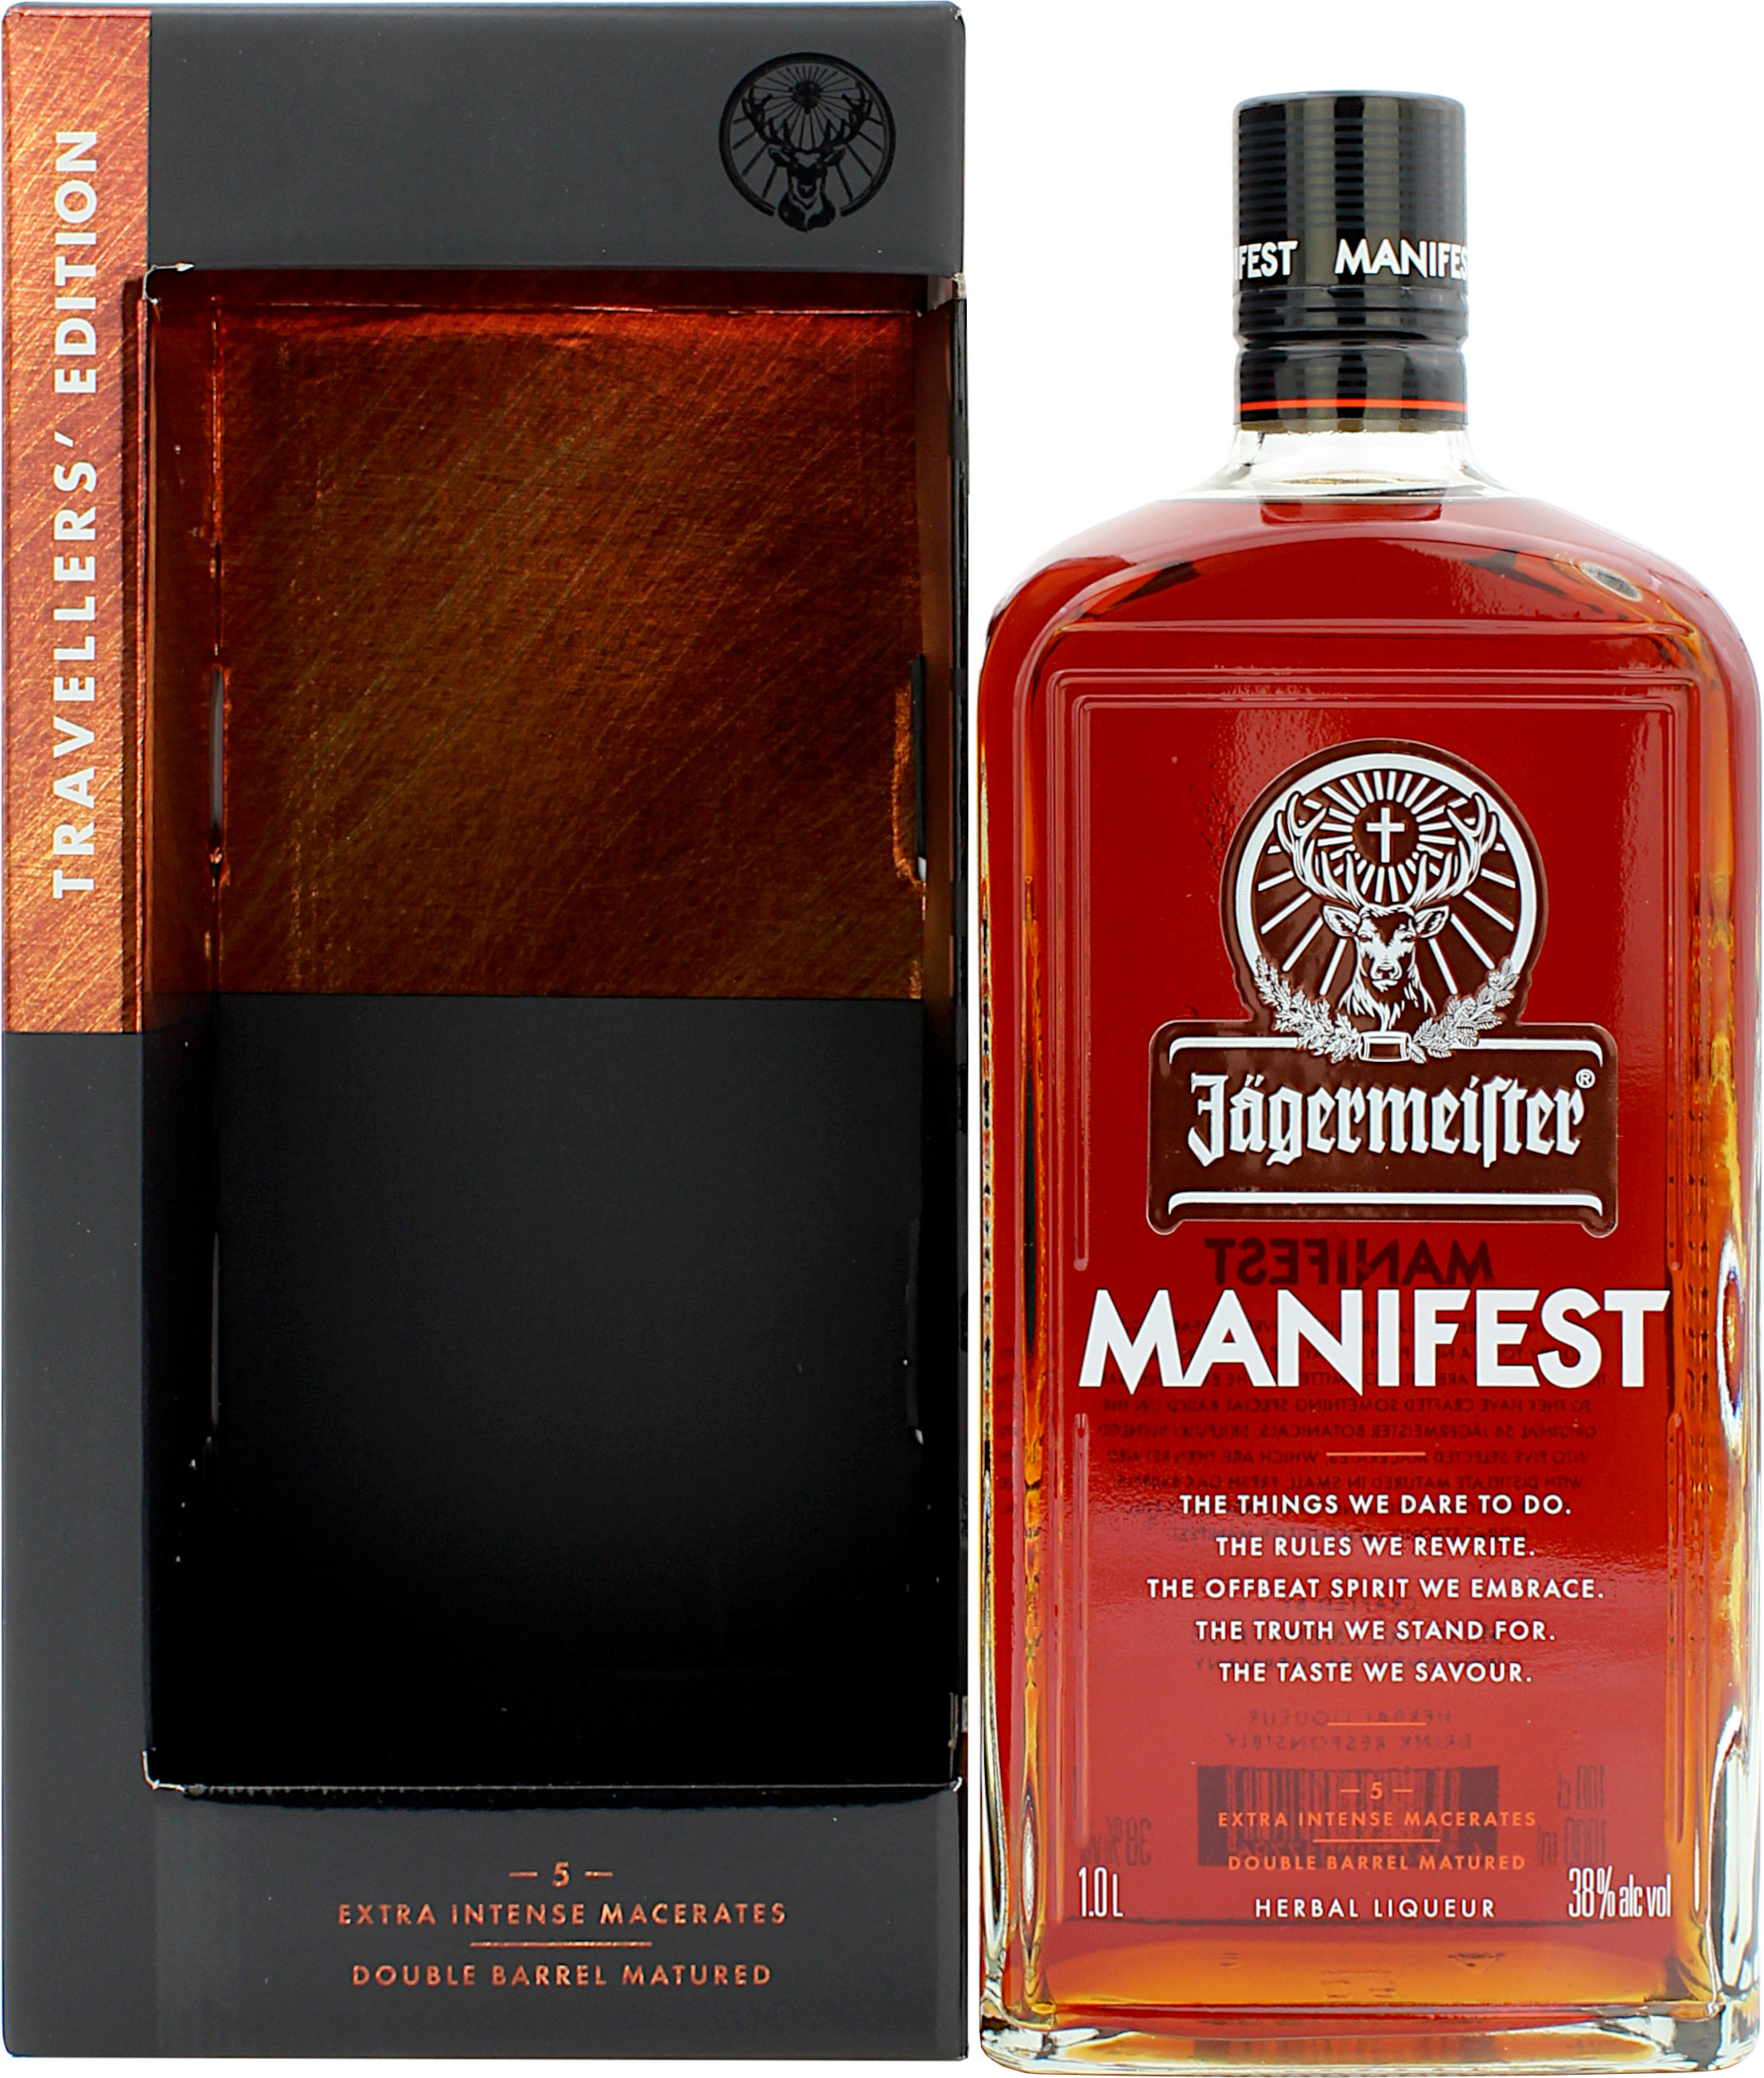 Jägermeister Manifest 38.0% 1 Liter